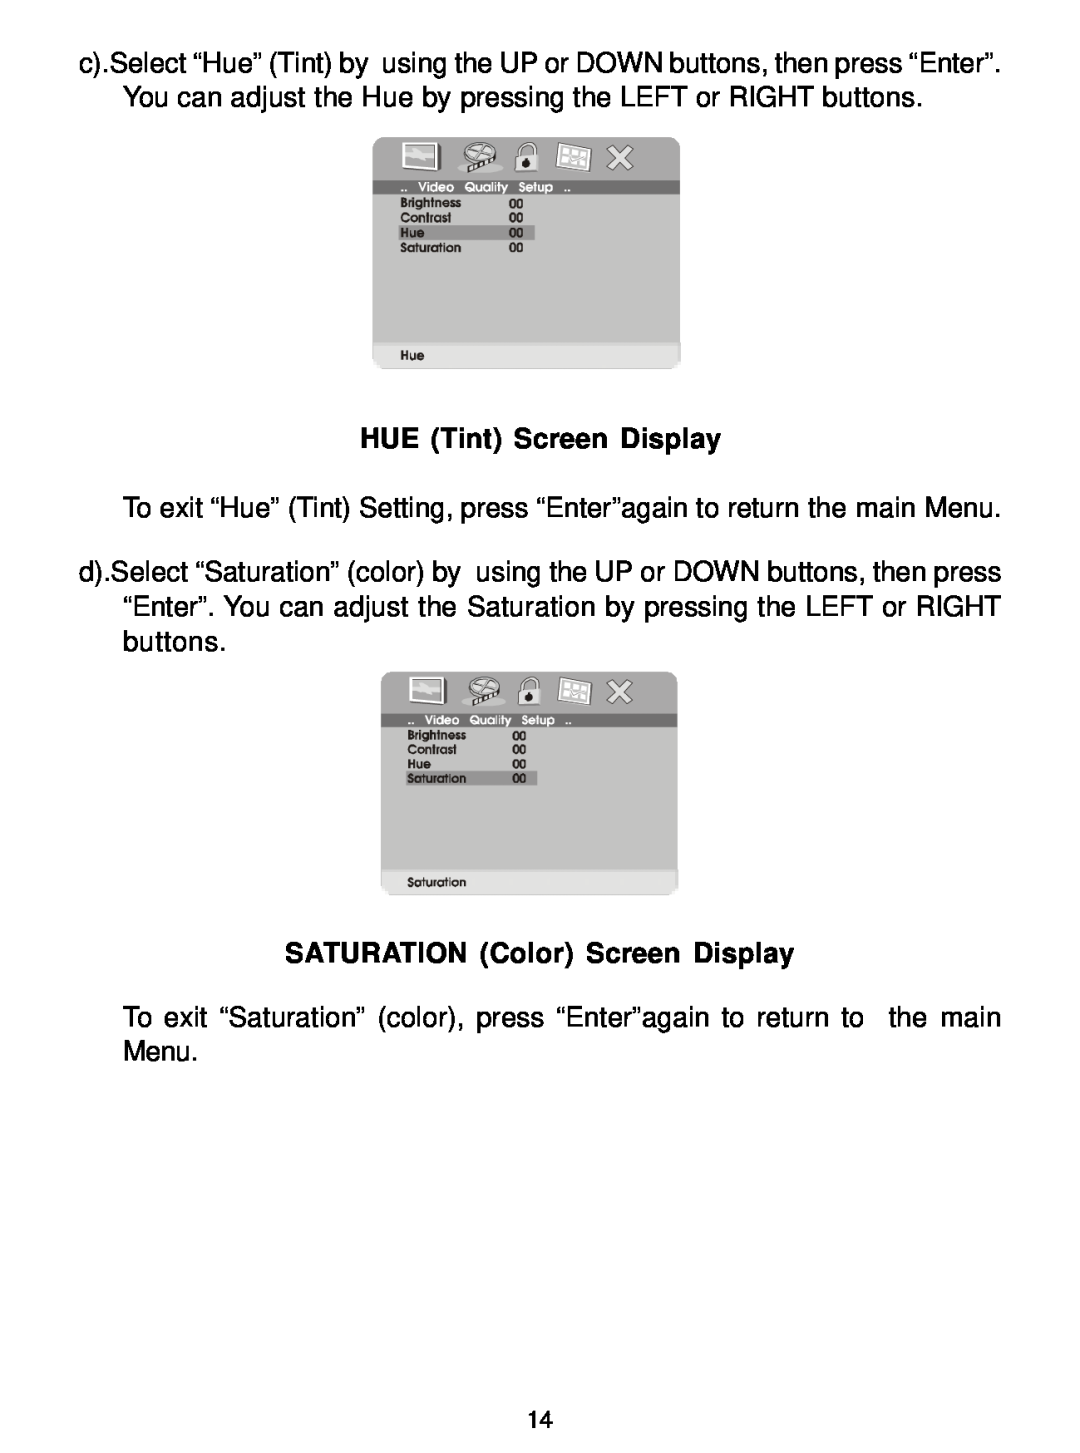 Audiovox D1726 manual HUE Tint Screen Display, SATURATION Color Screen Display 